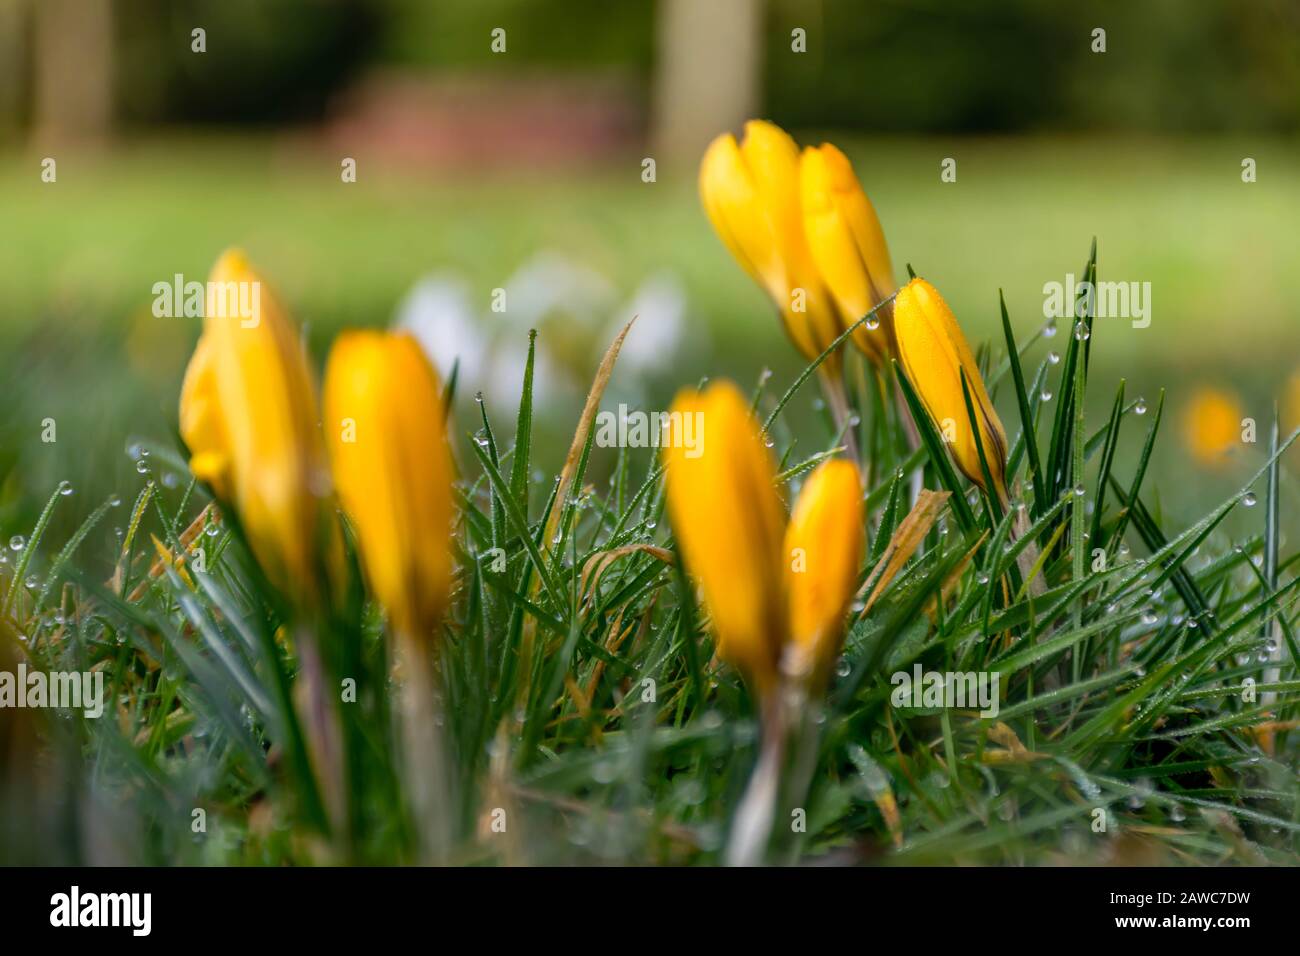 Yellow crocuses in focus and unfocused background Stock Photo